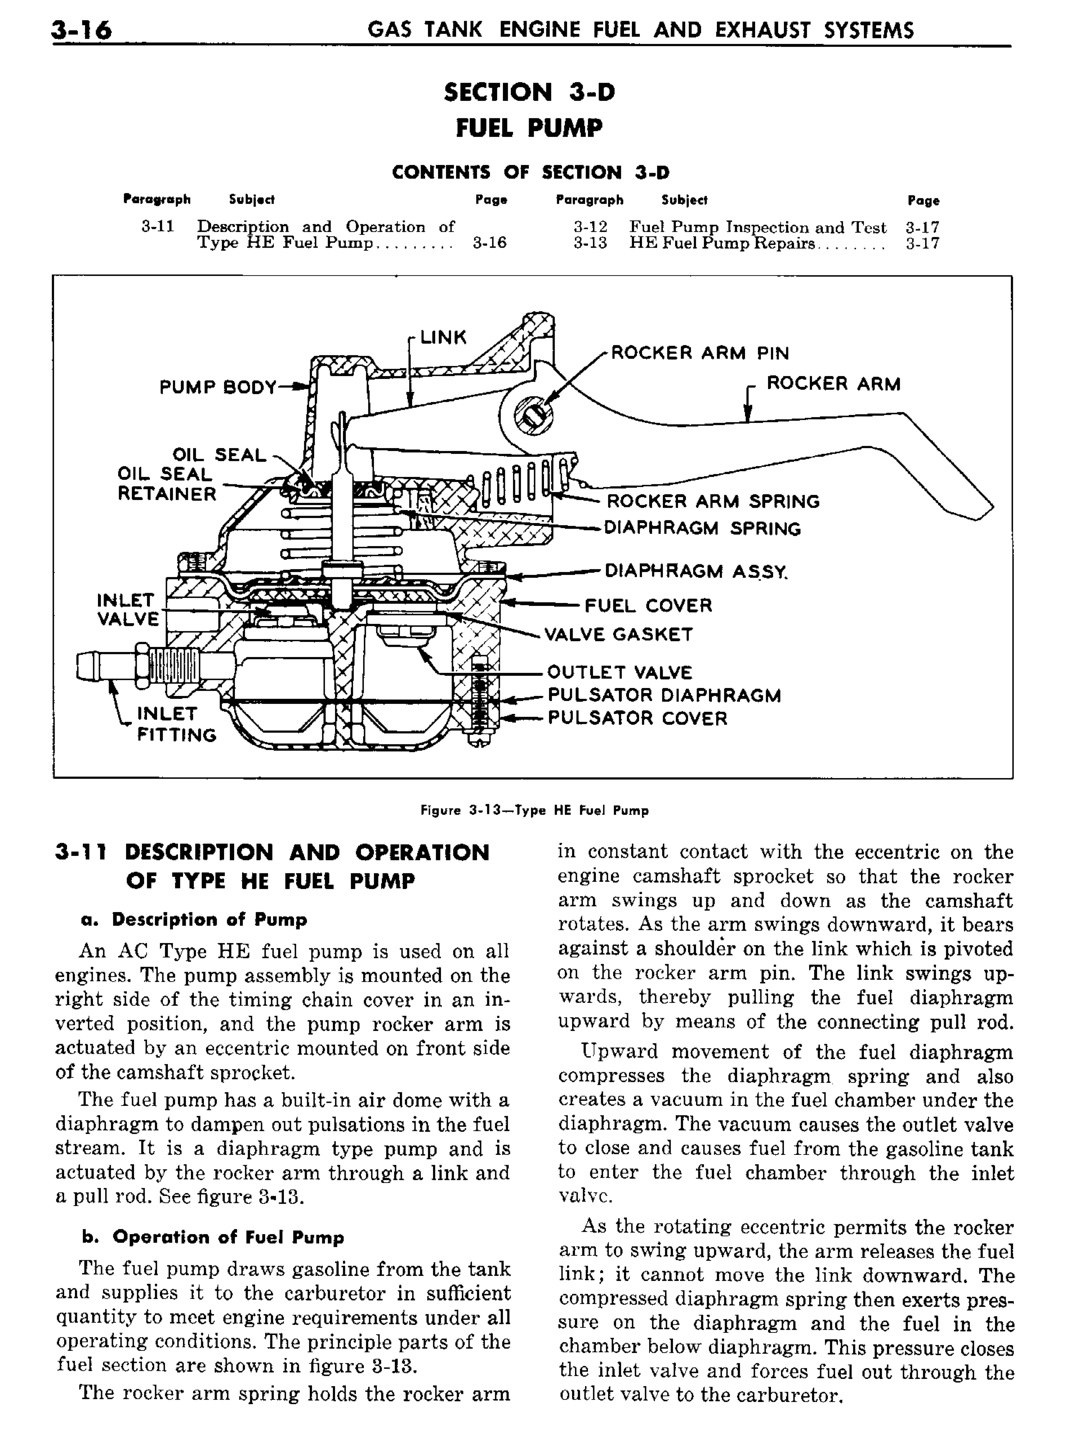 n_04 1960 Buick Shop Manual - Engine Fuel & Exhaust-016-016.jpg